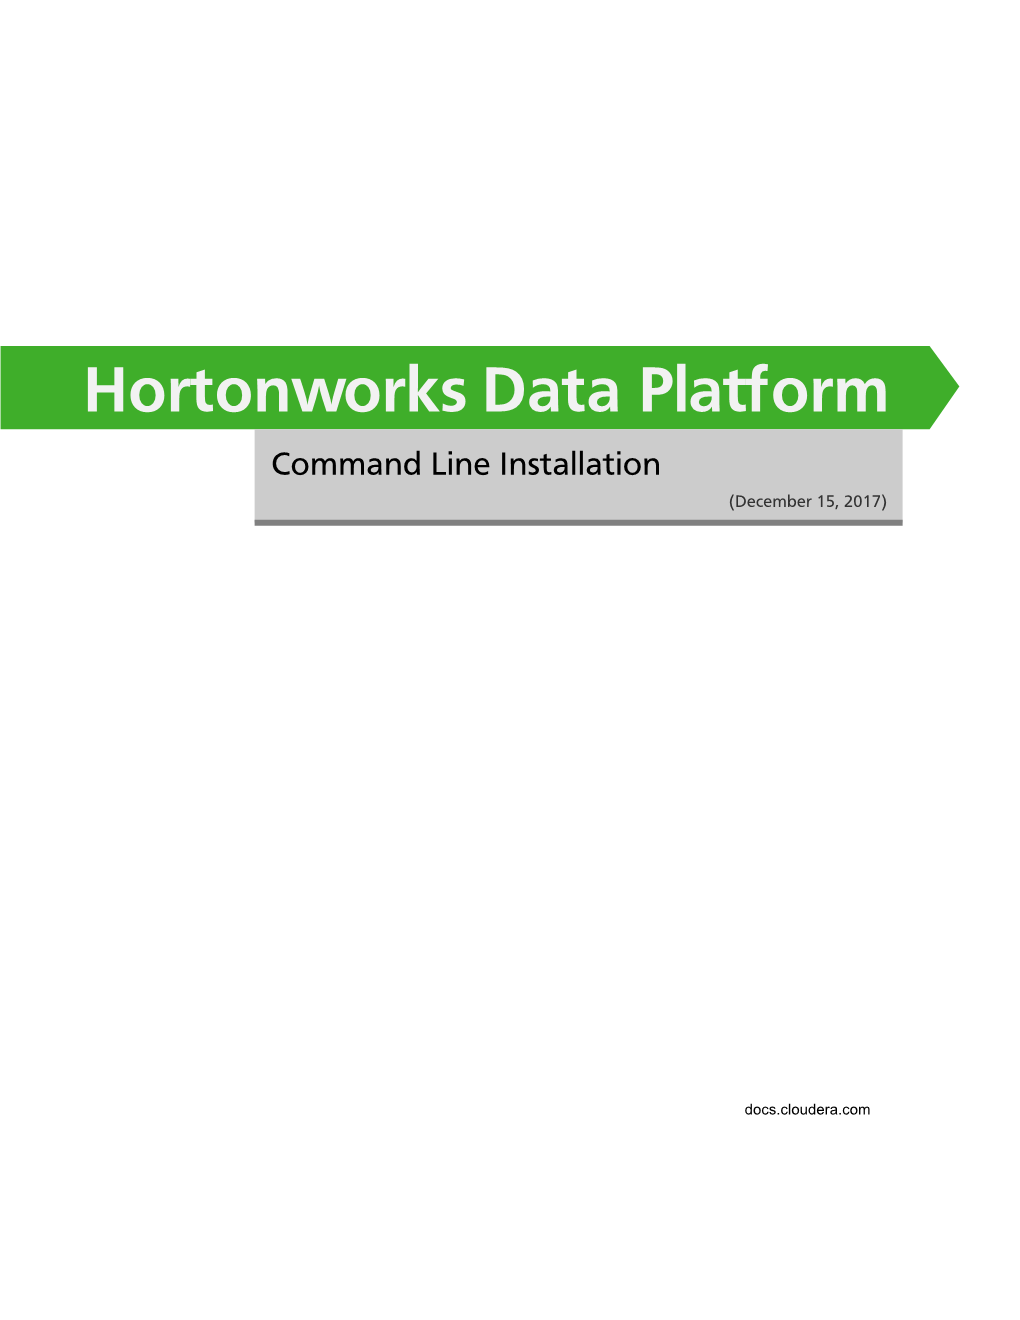 Hortonworks Data Platform Command Line Installation (December 15, 2017)